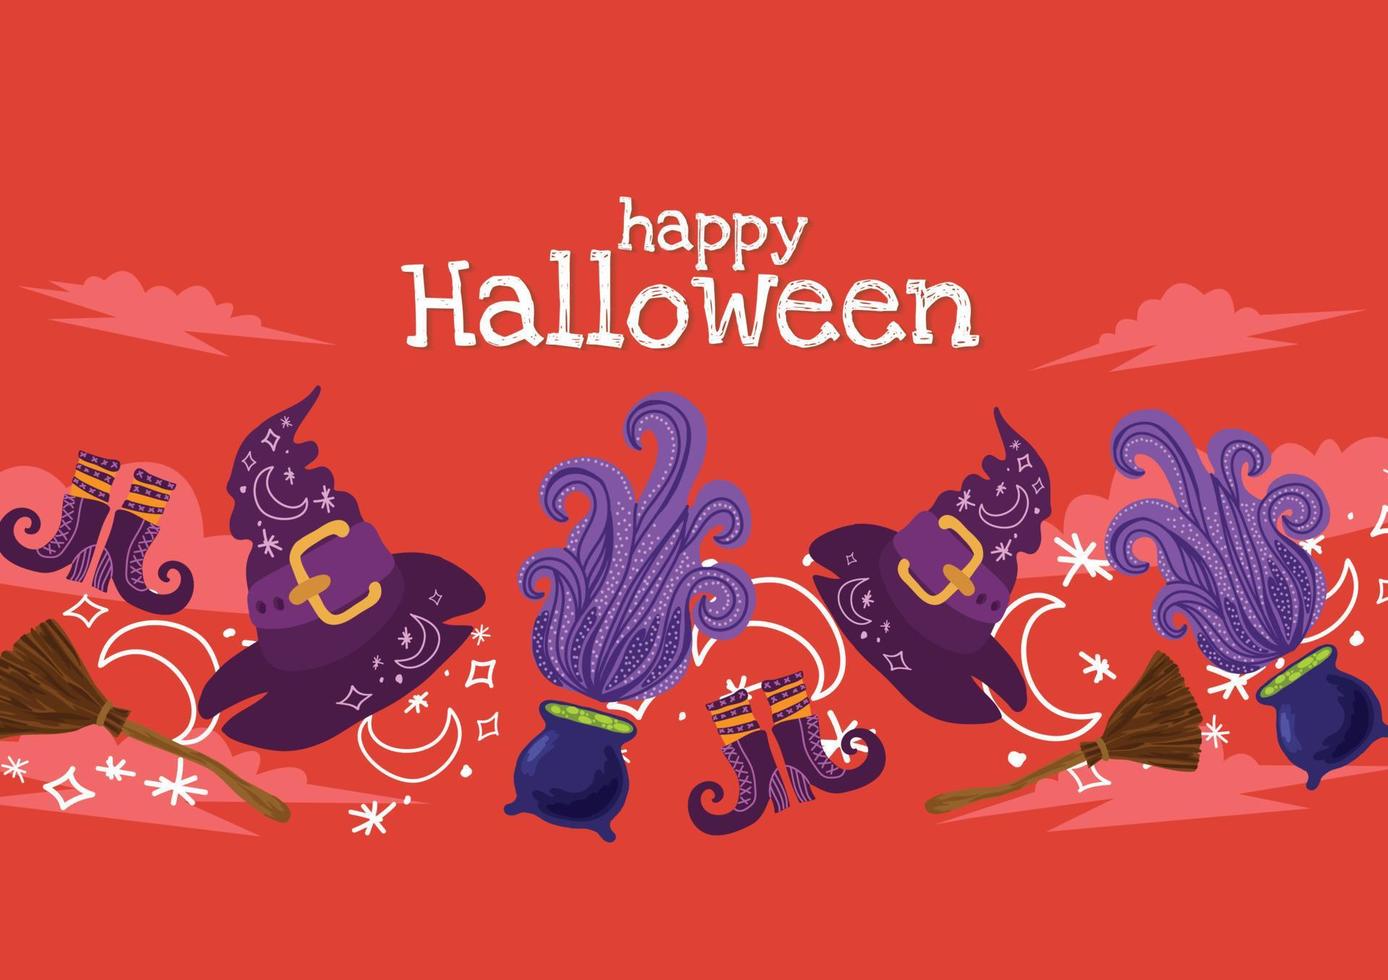 cute items spooky banner cute design for halloween vector